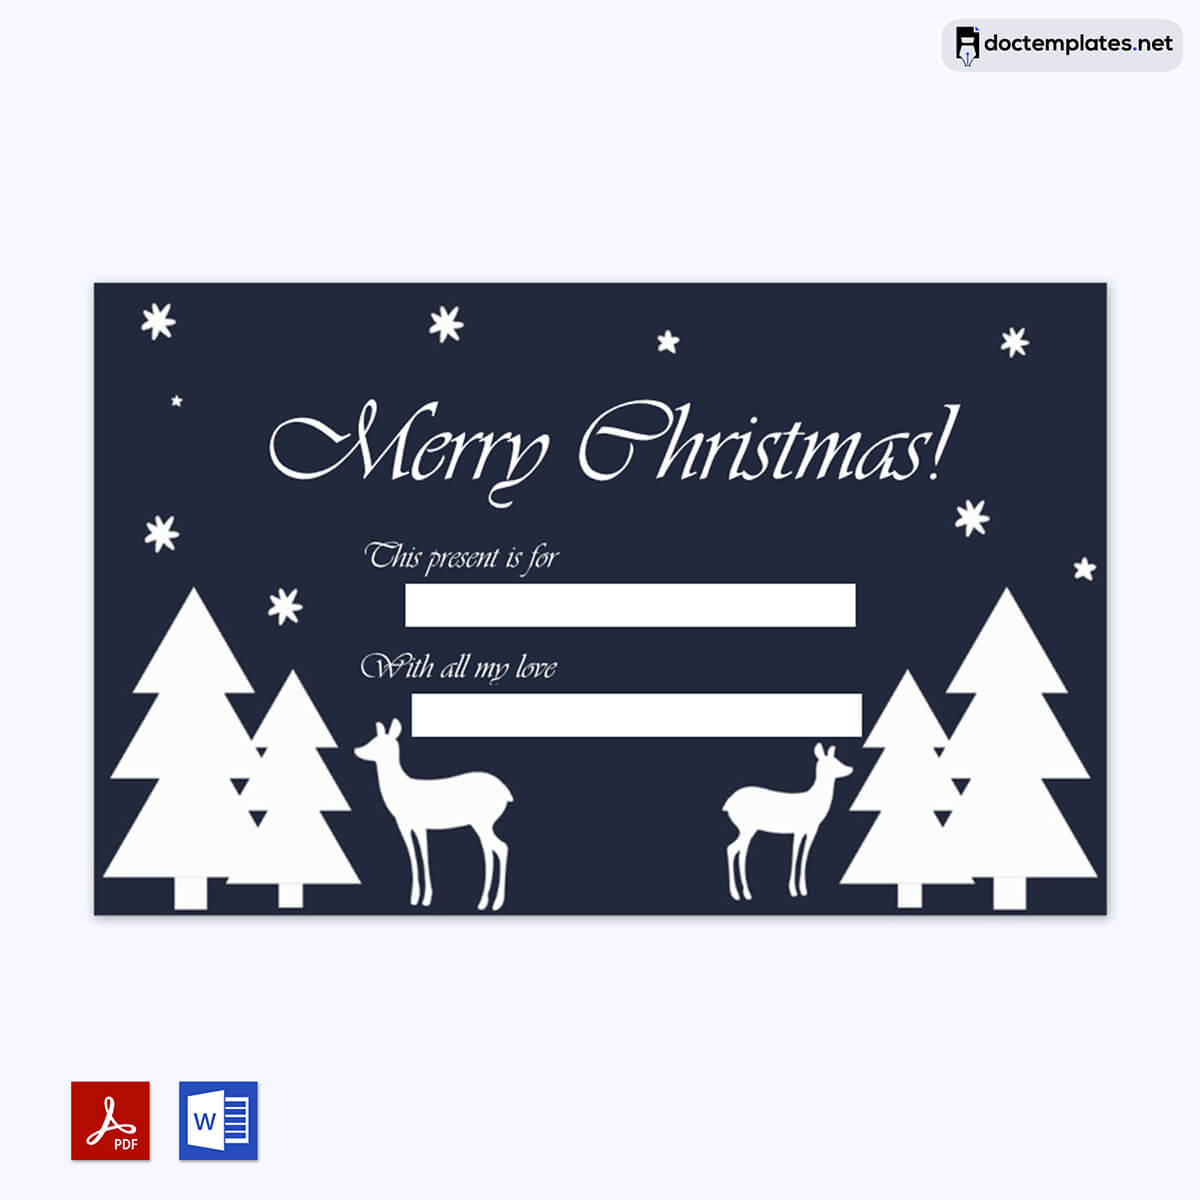 Image of Free printable gift tags PDF
Free printable gift tags PDF
